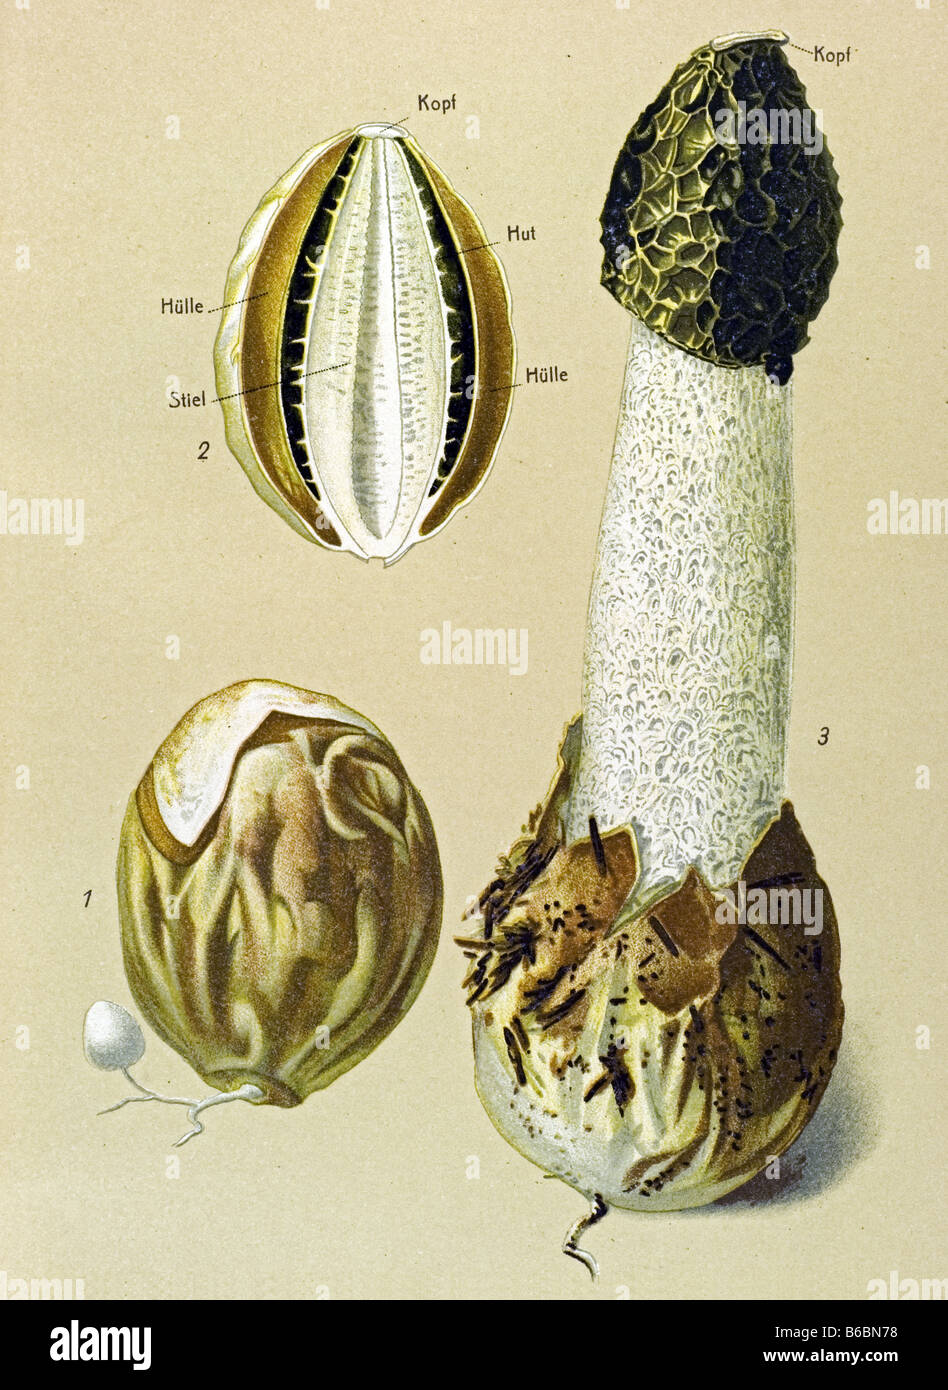 Stinkhorn, Phallus impudicus, mushrooms fungi illustrations Stock Photo